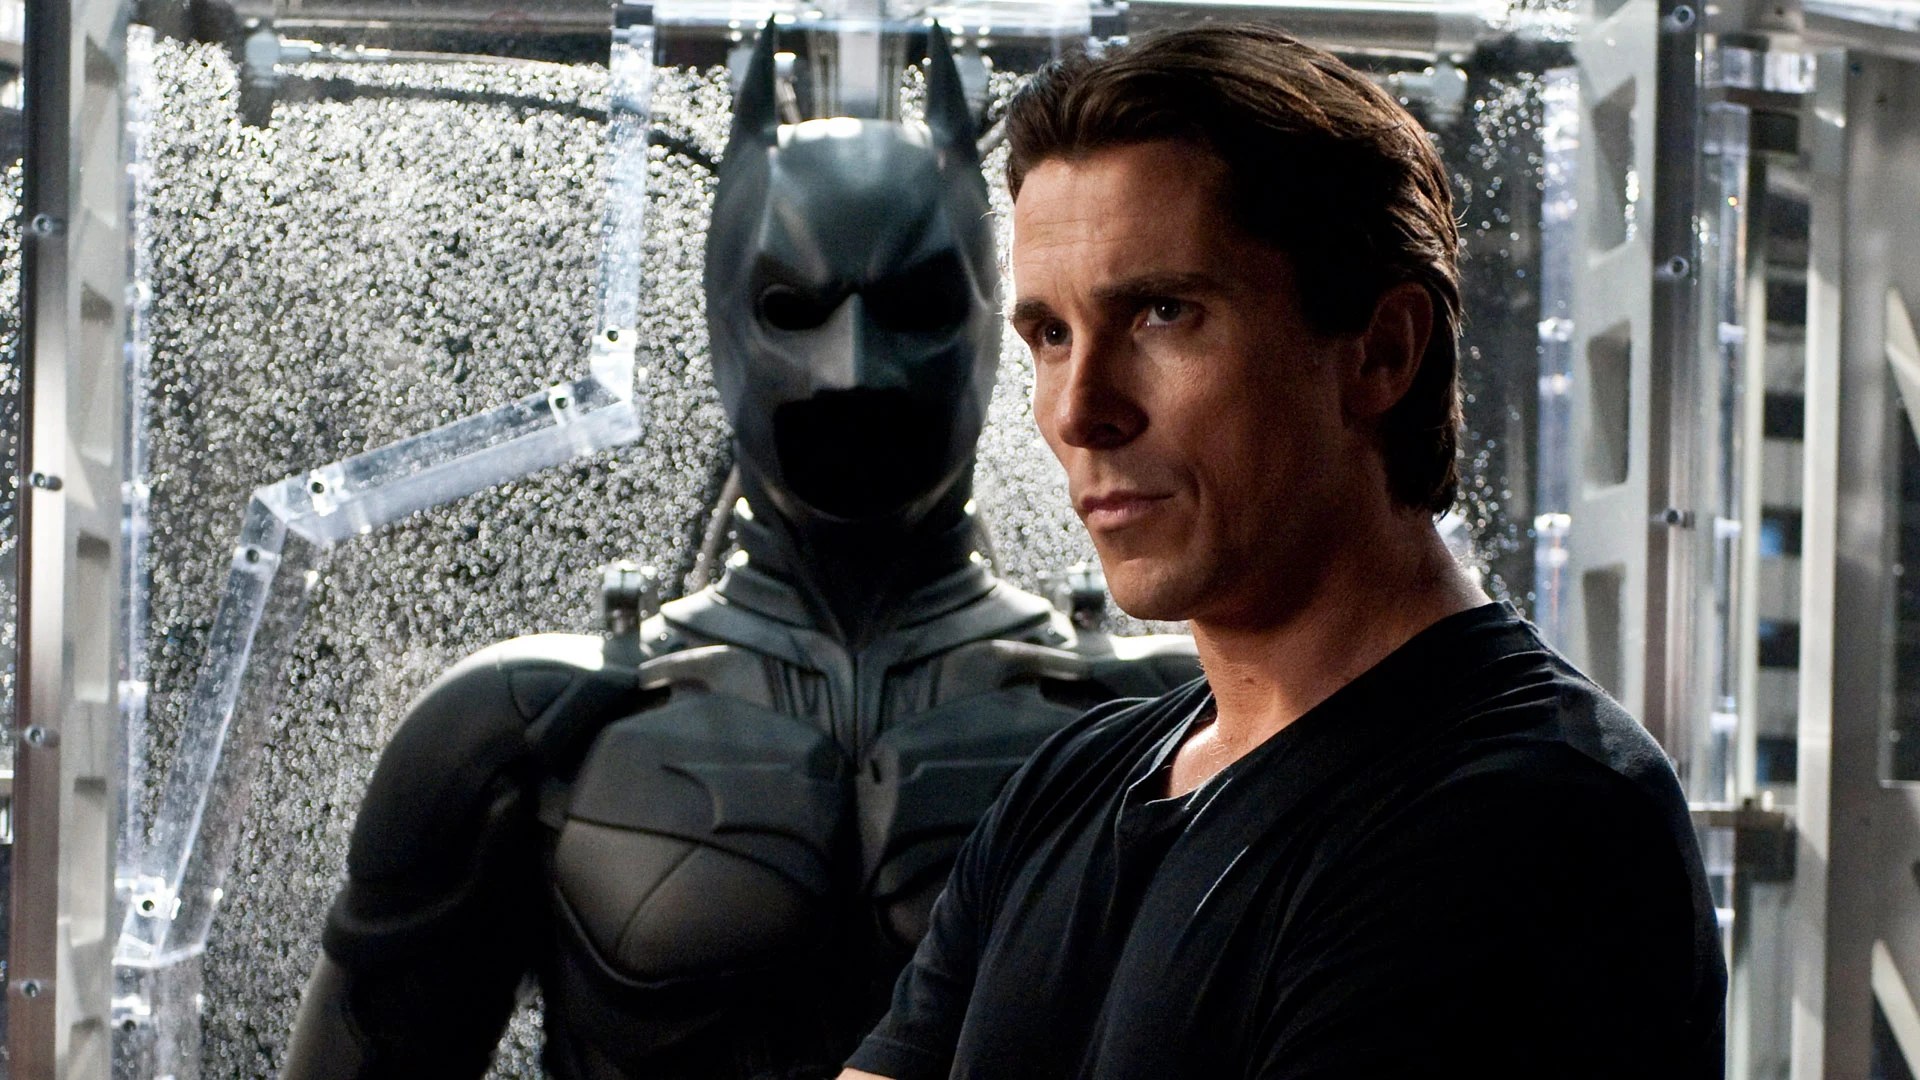 Is The Dark Knight Rises a bad film or simply misunderstood? | Digital  Trends